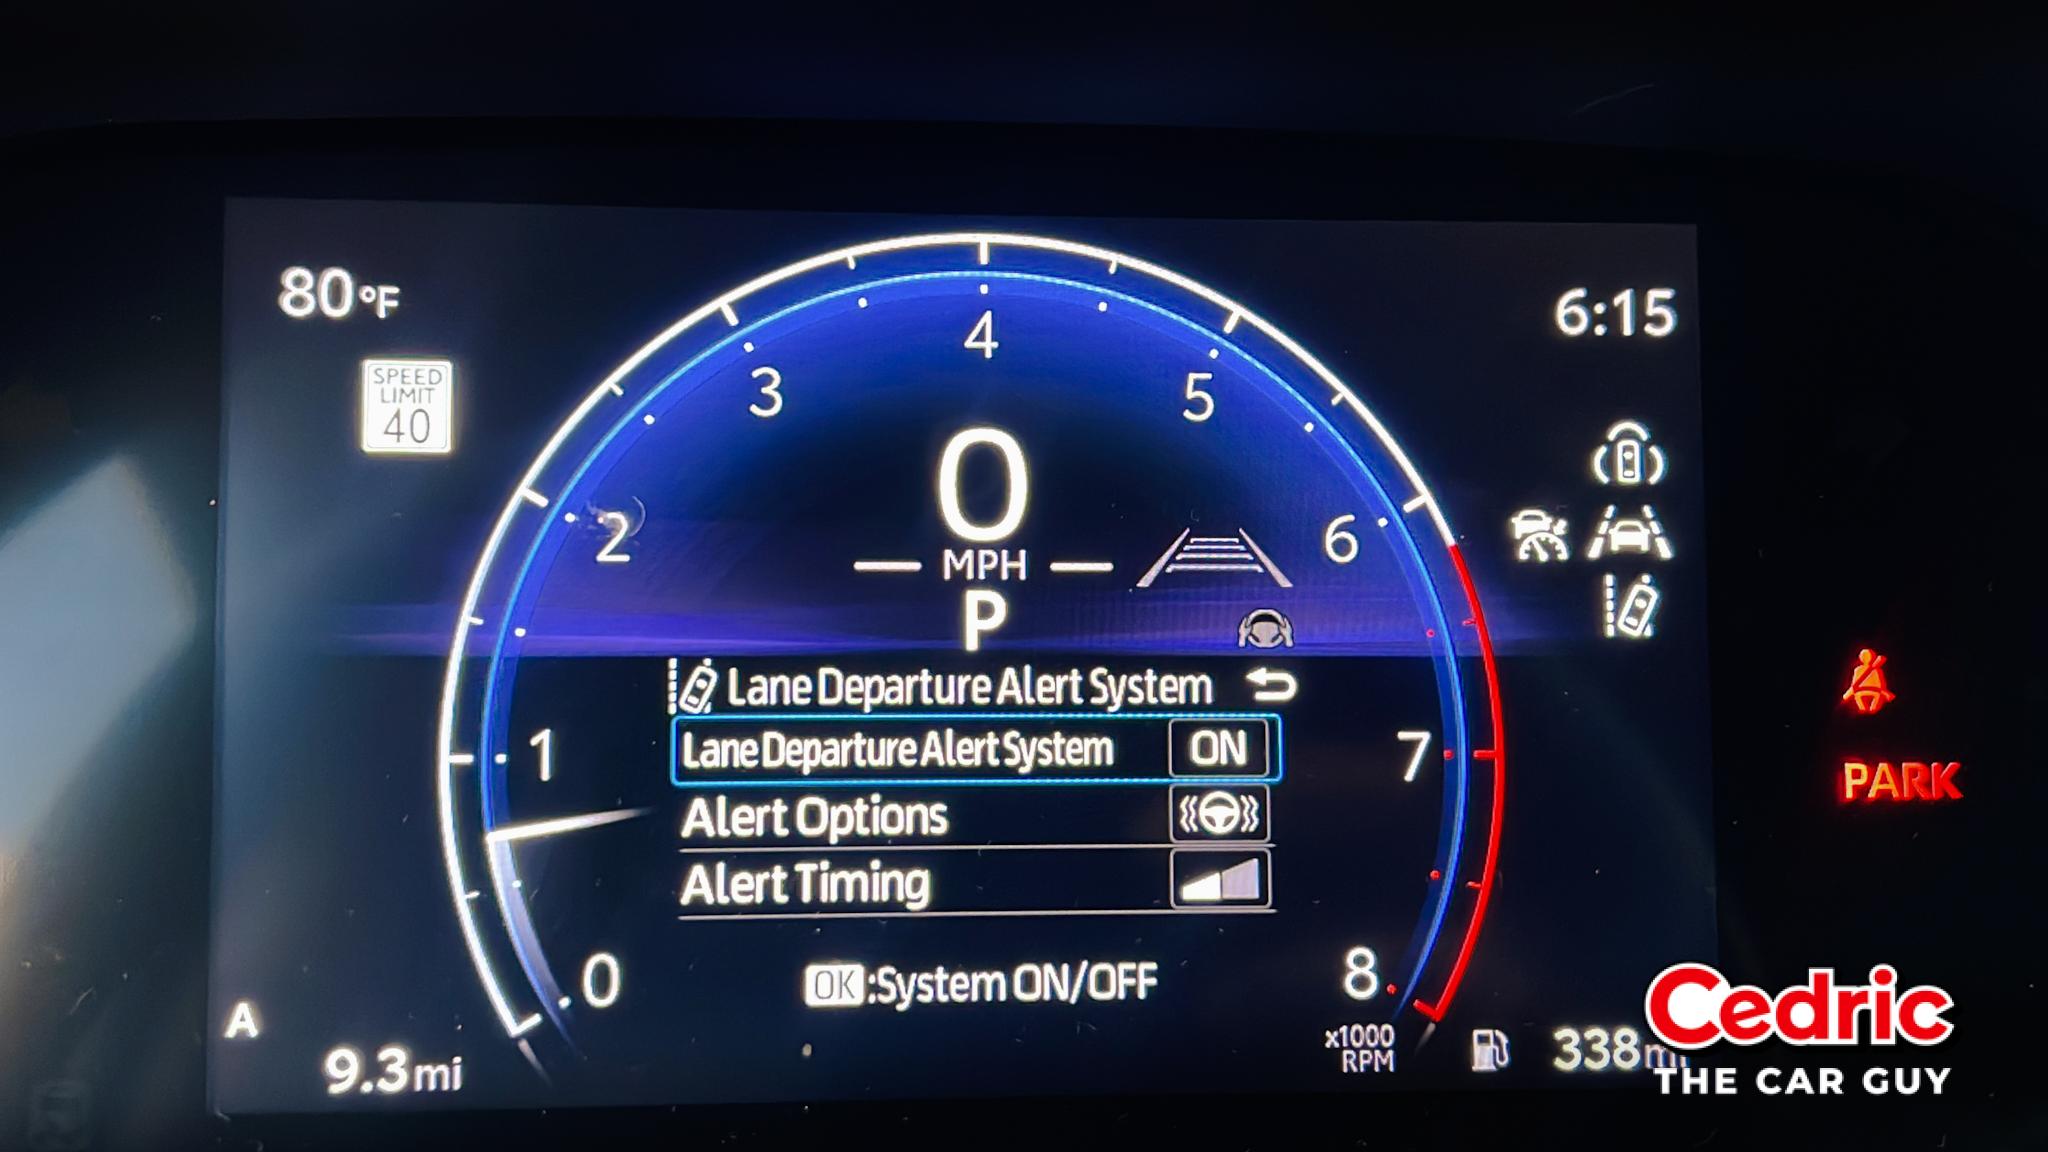 Lane Departure Alert System Menu within the Toyota Grand Highlander's Multi-Information Display (MID)